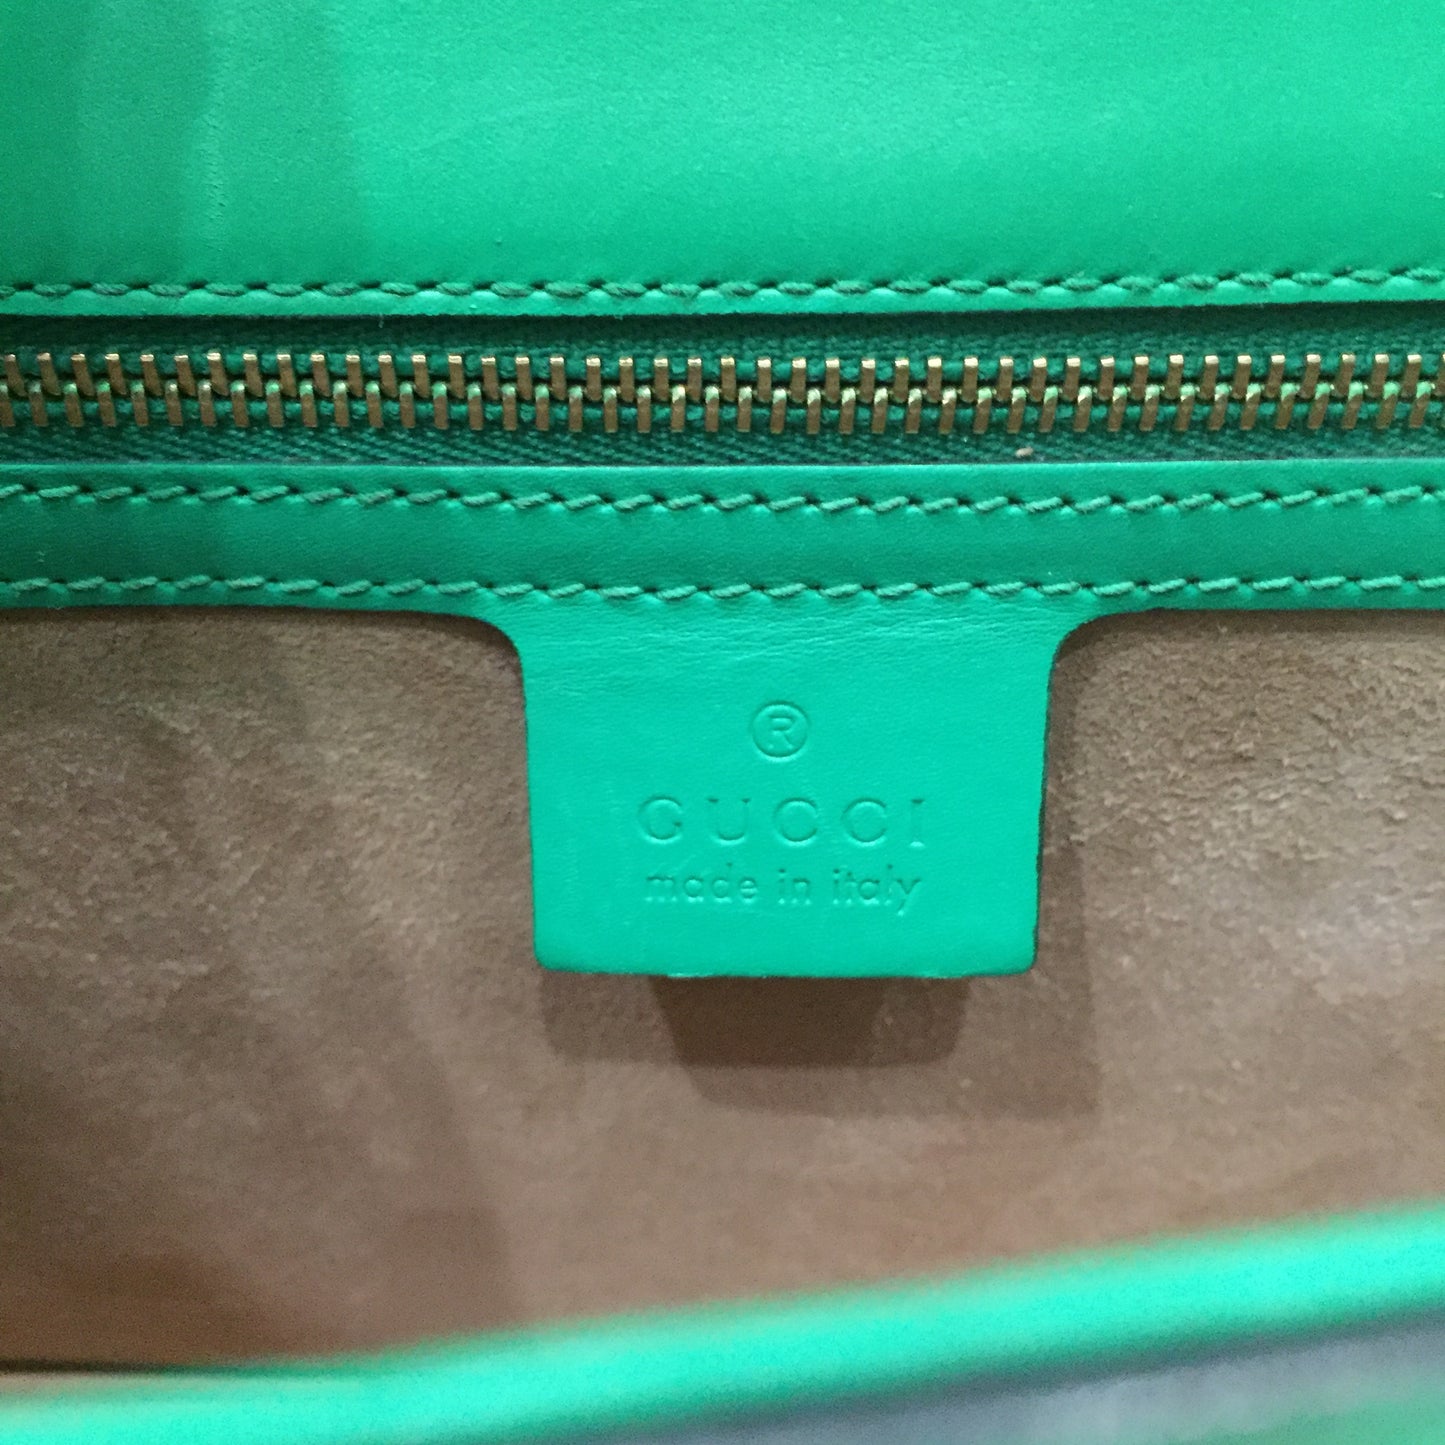 Gucci Green Calfskin Sylvie Medium Shoulder Bag Sku# 72204